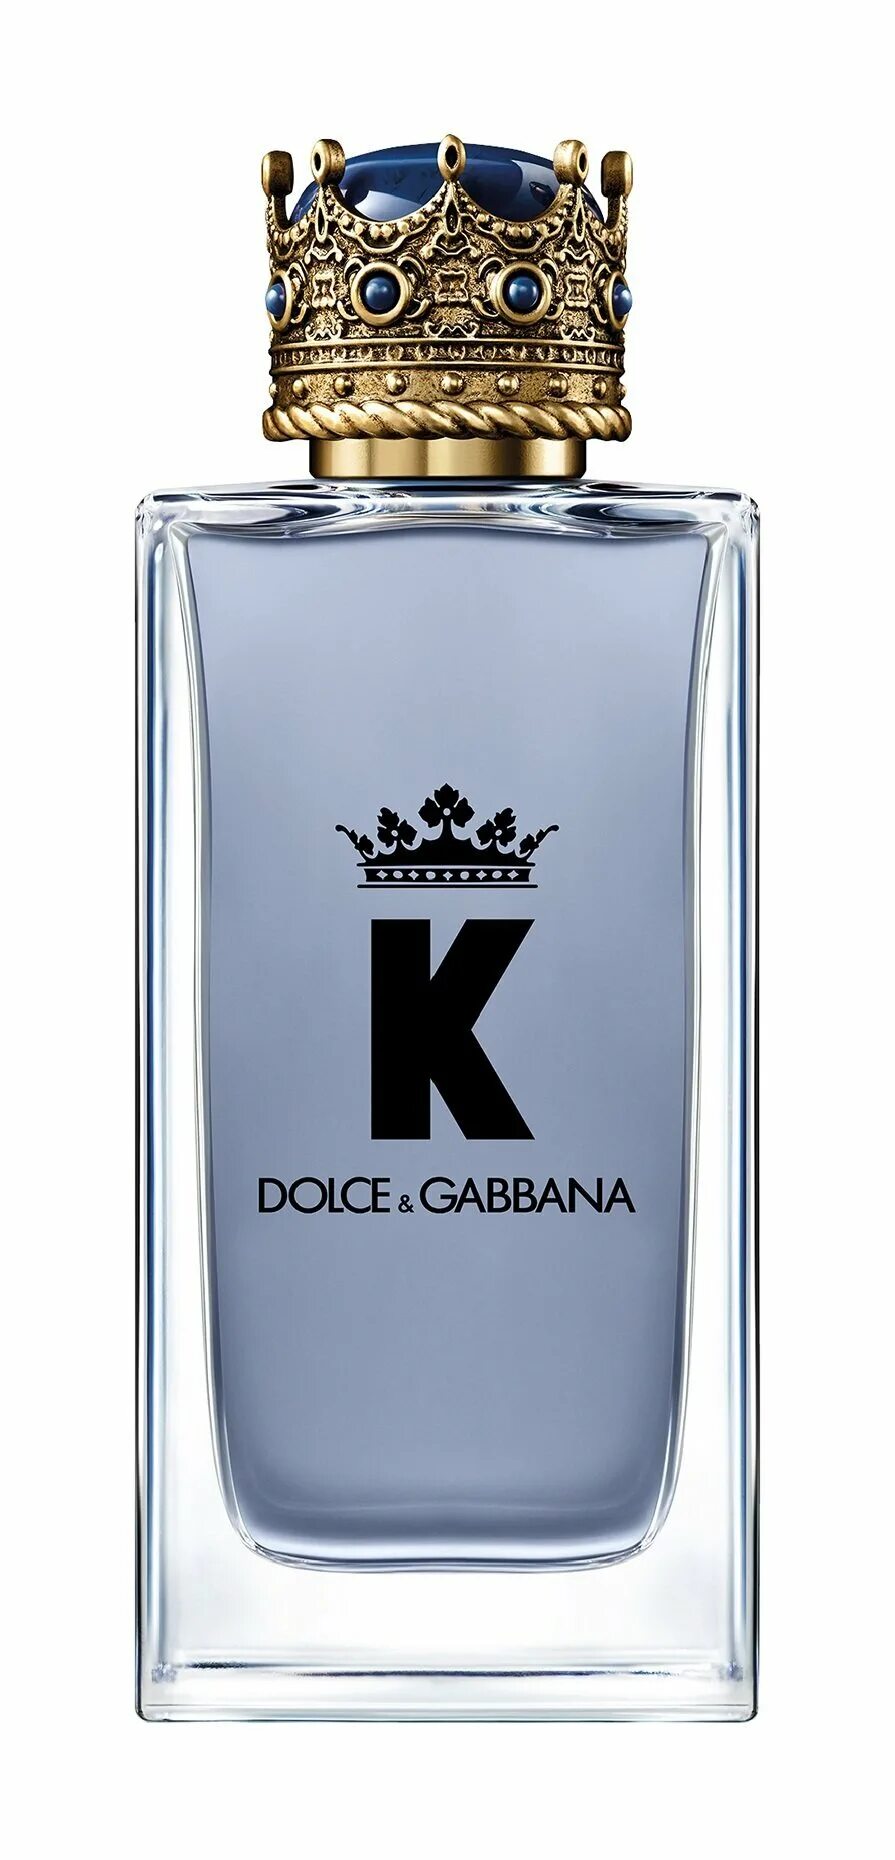 Дольче габбана мужские кинг. Dolce & Gabbana by k EDP, 100 ml. •Dolce&Gabbana k EDT 100ml. Dolce Gabbana k King 100ml EDT. Dolce Gabbana King 100ml.